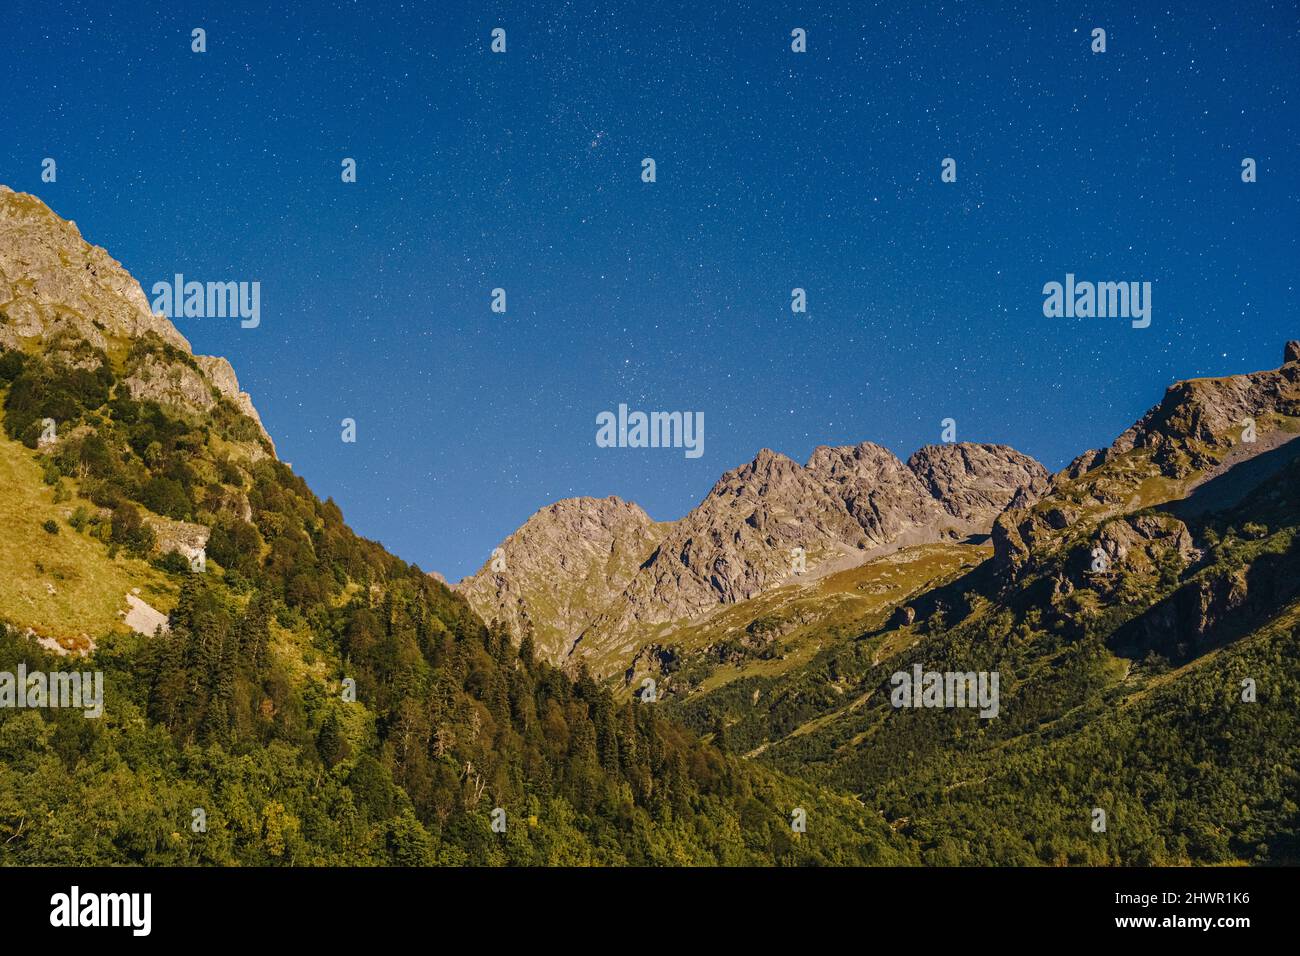 Caucasus mountain range with star field at night, Sochi, Russia Stock Photo